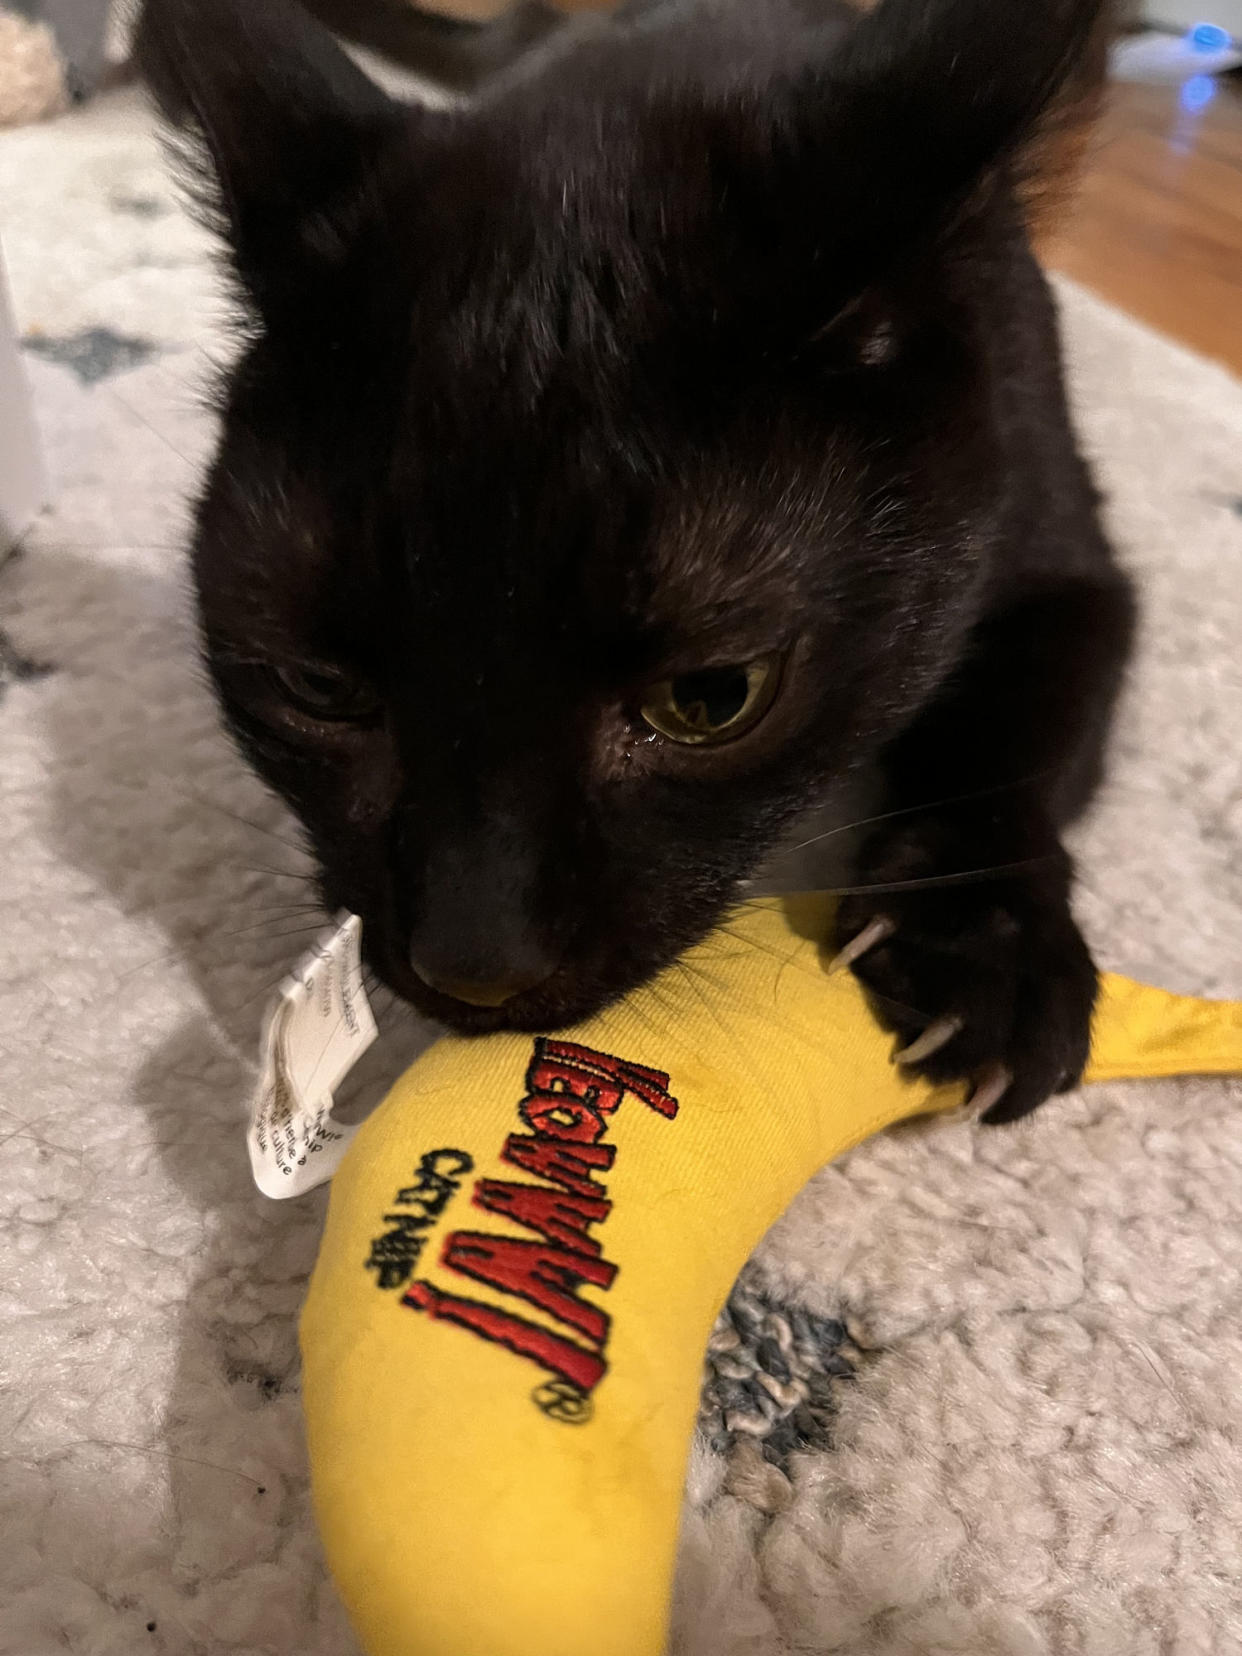 Cat plating with Yeowww! Yellow Banana Catnip Toy (Courtesy Lauren Swanson)